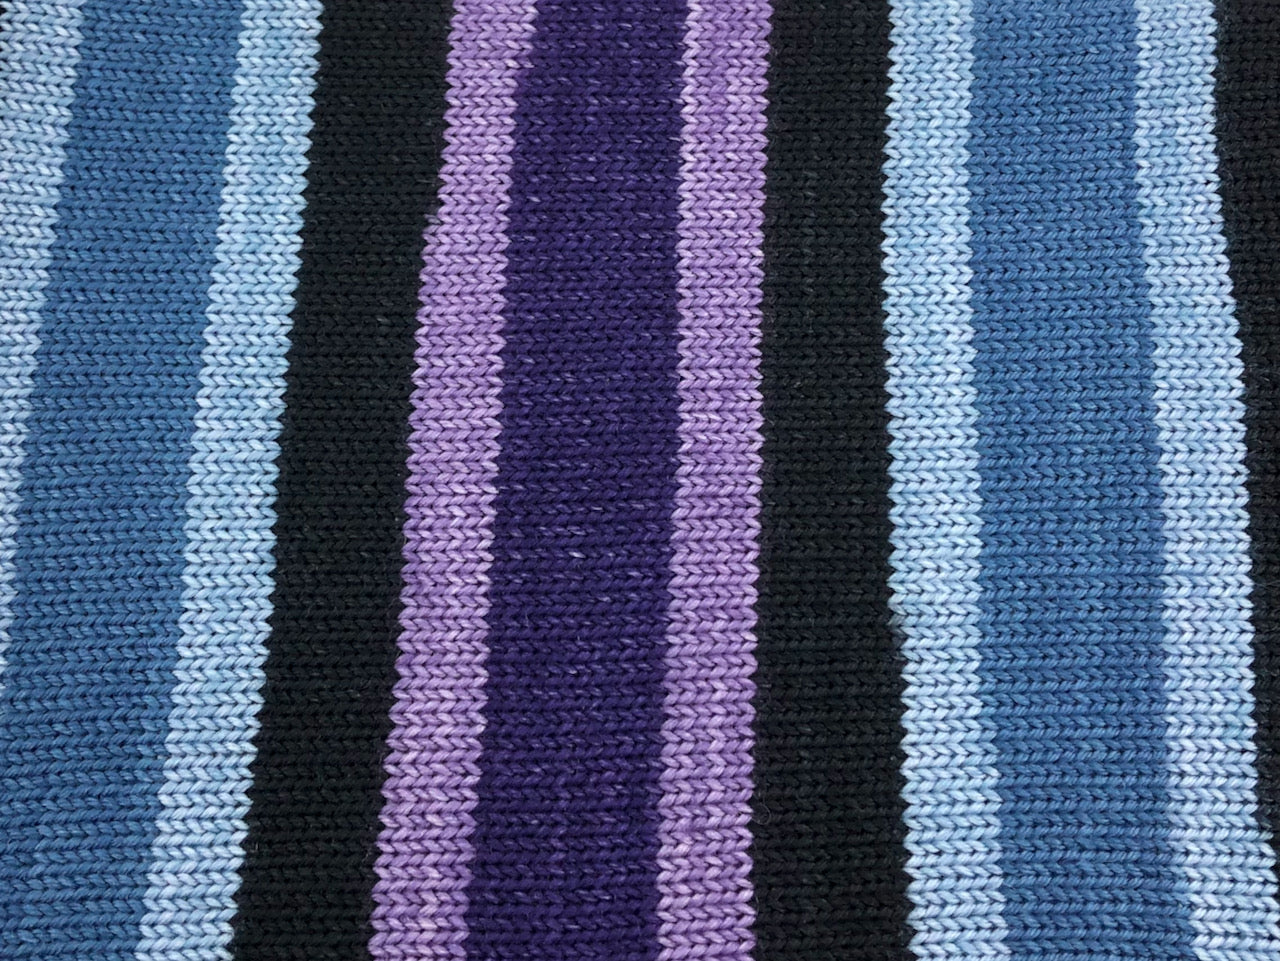 Twilight self-striping sock yarn